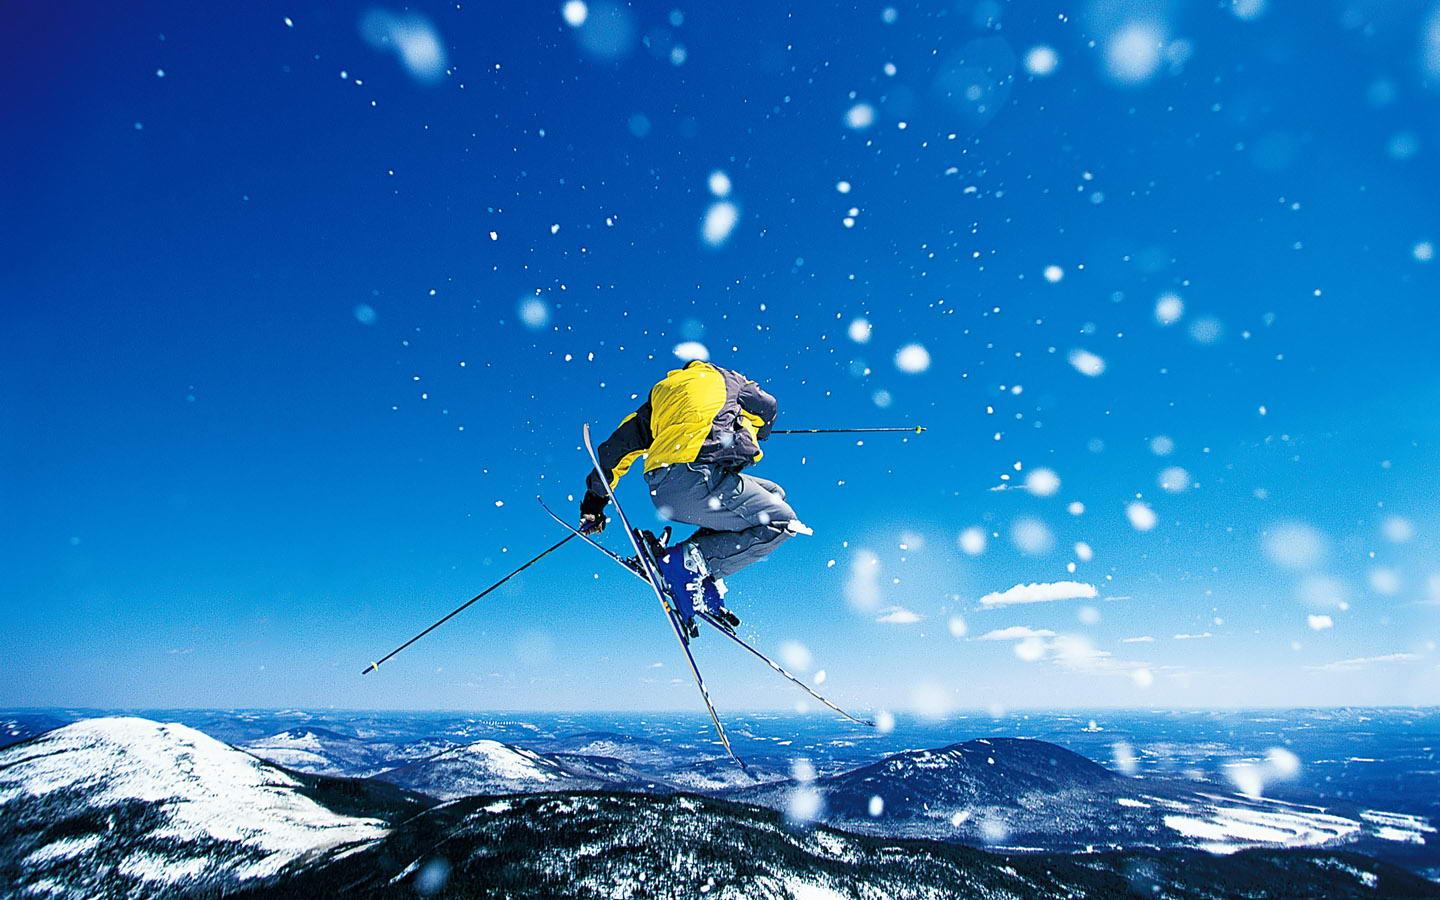 extrema fondos de pantalla hd,esquí de estilo libre,esquí,nieve,deporte extremo,cielo